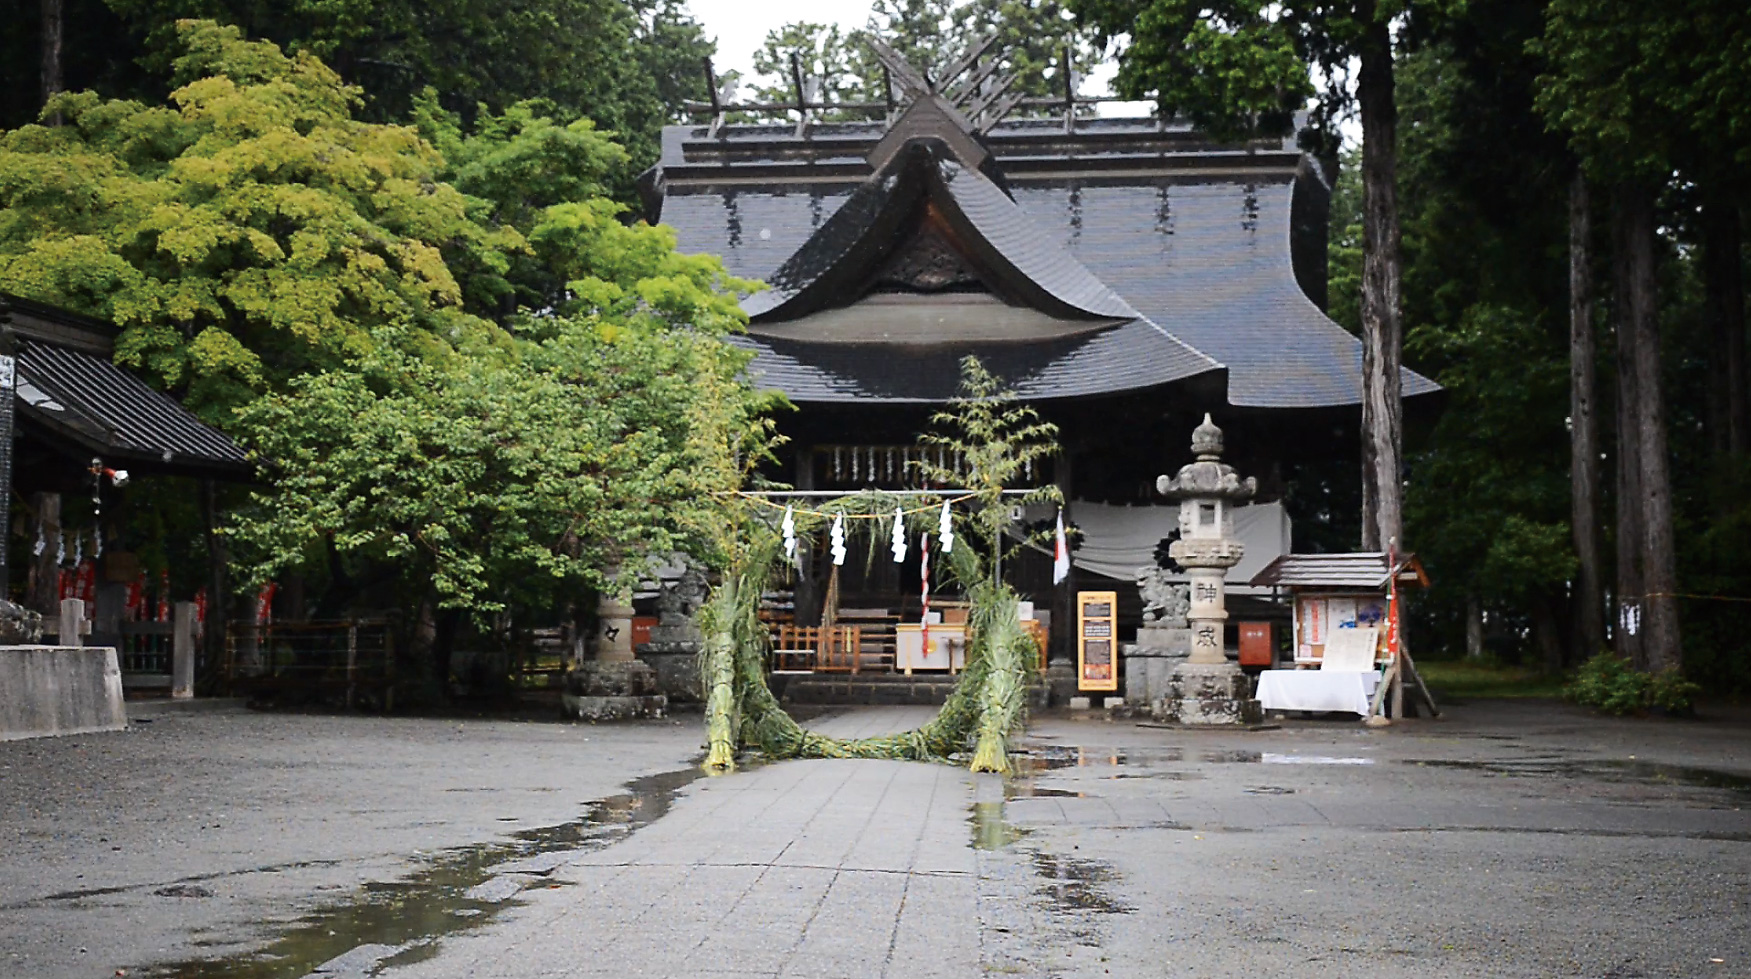 Fuji Omuro Sengen Jinja Shrine